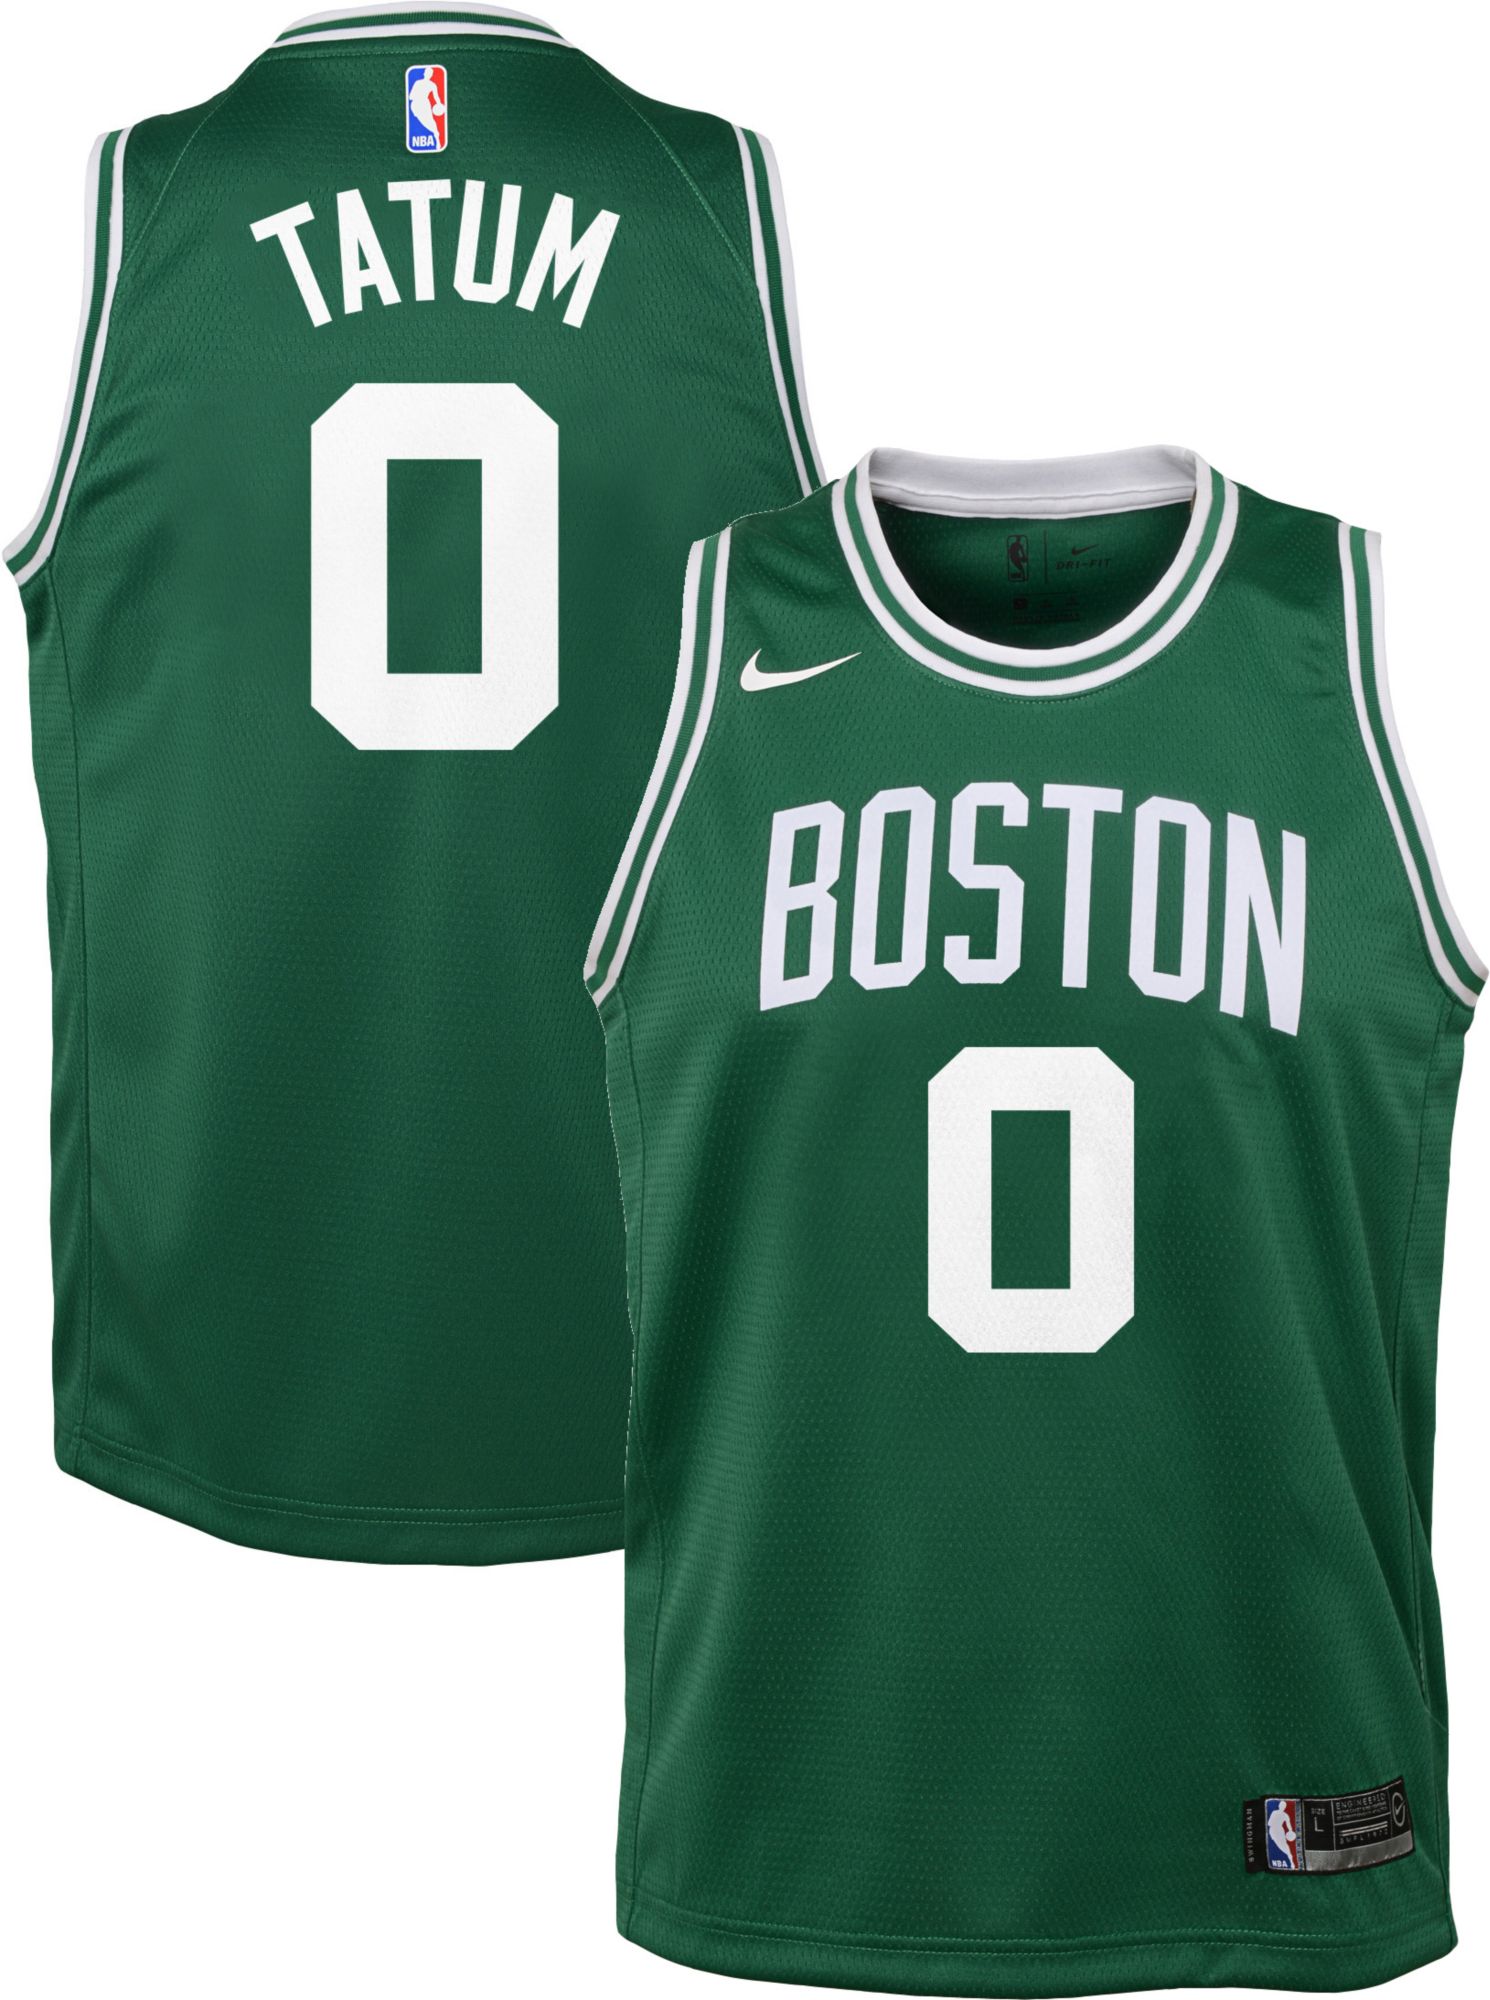 Boston Celtics Kids' Apparel | Curbside 